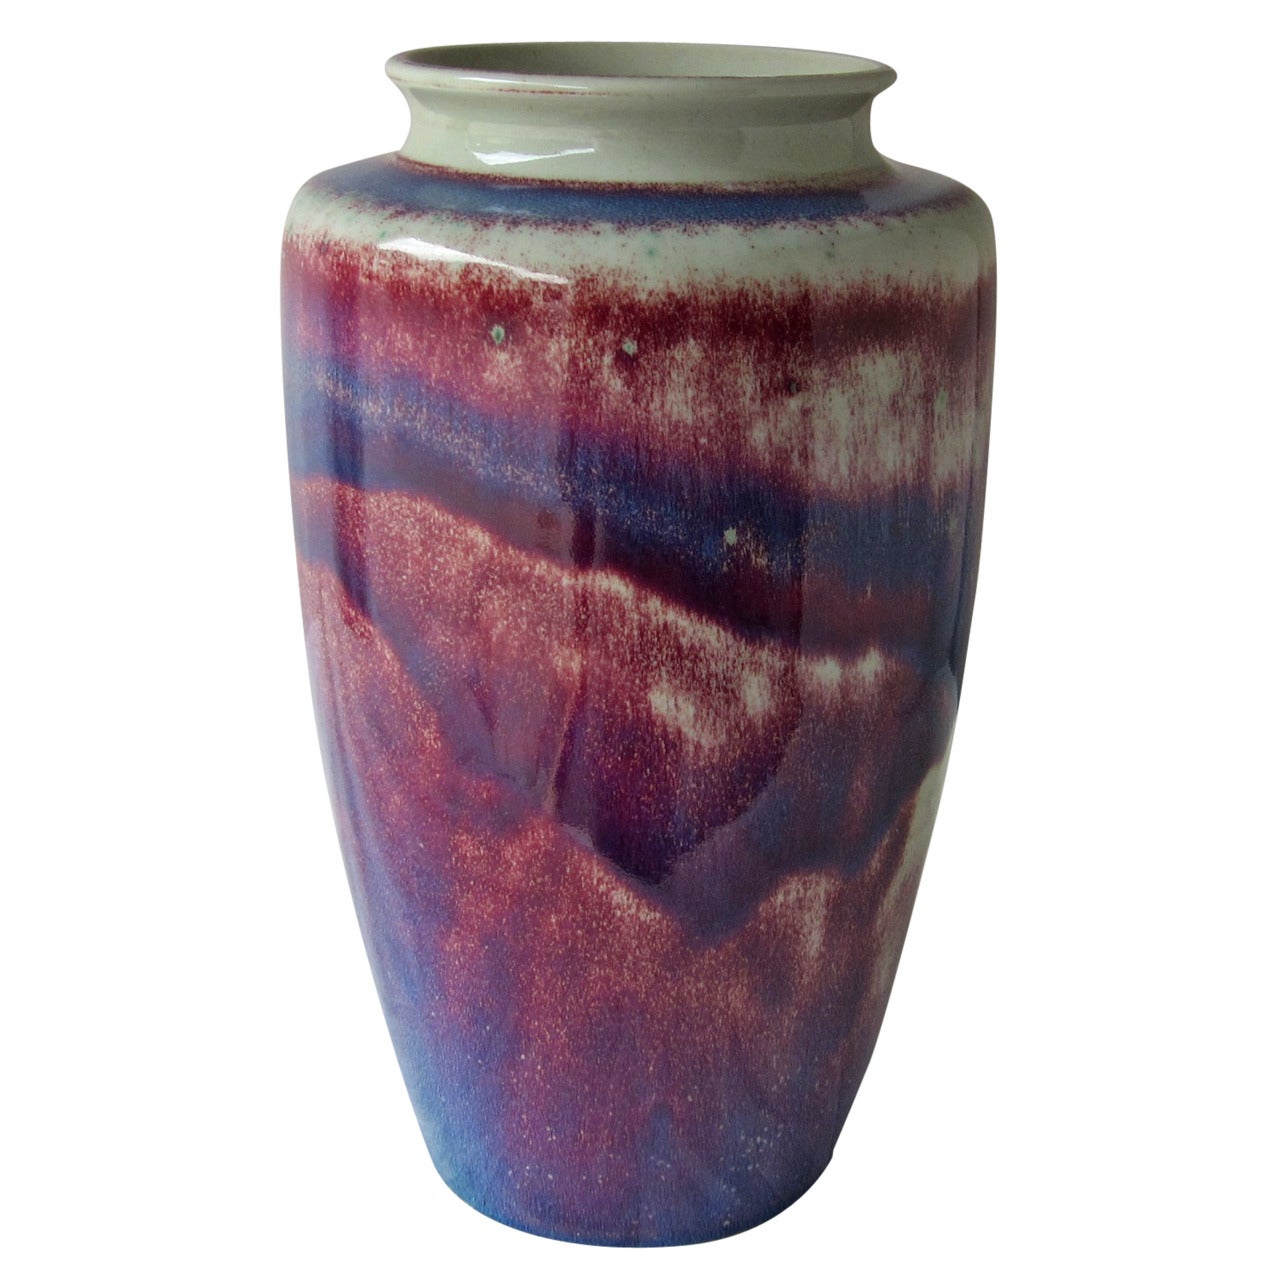 Ruskin "High Fired" Pottery Vase